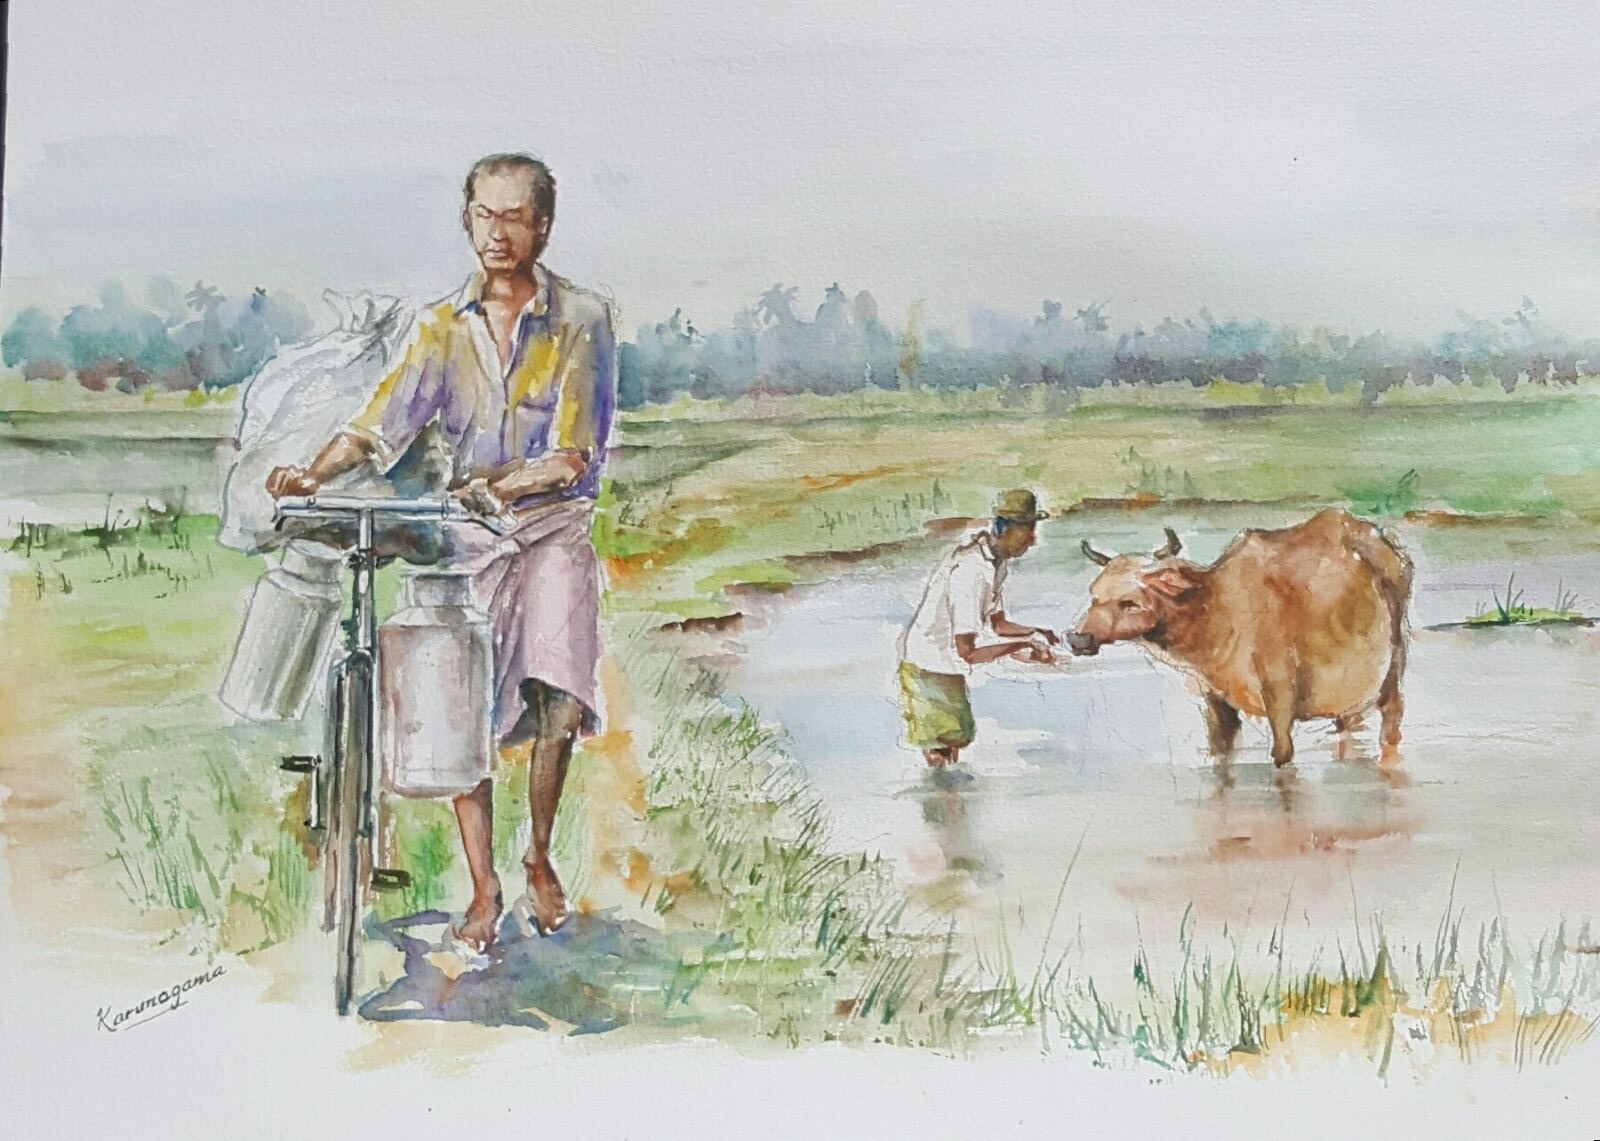 Milkman by Sarath Karunagama